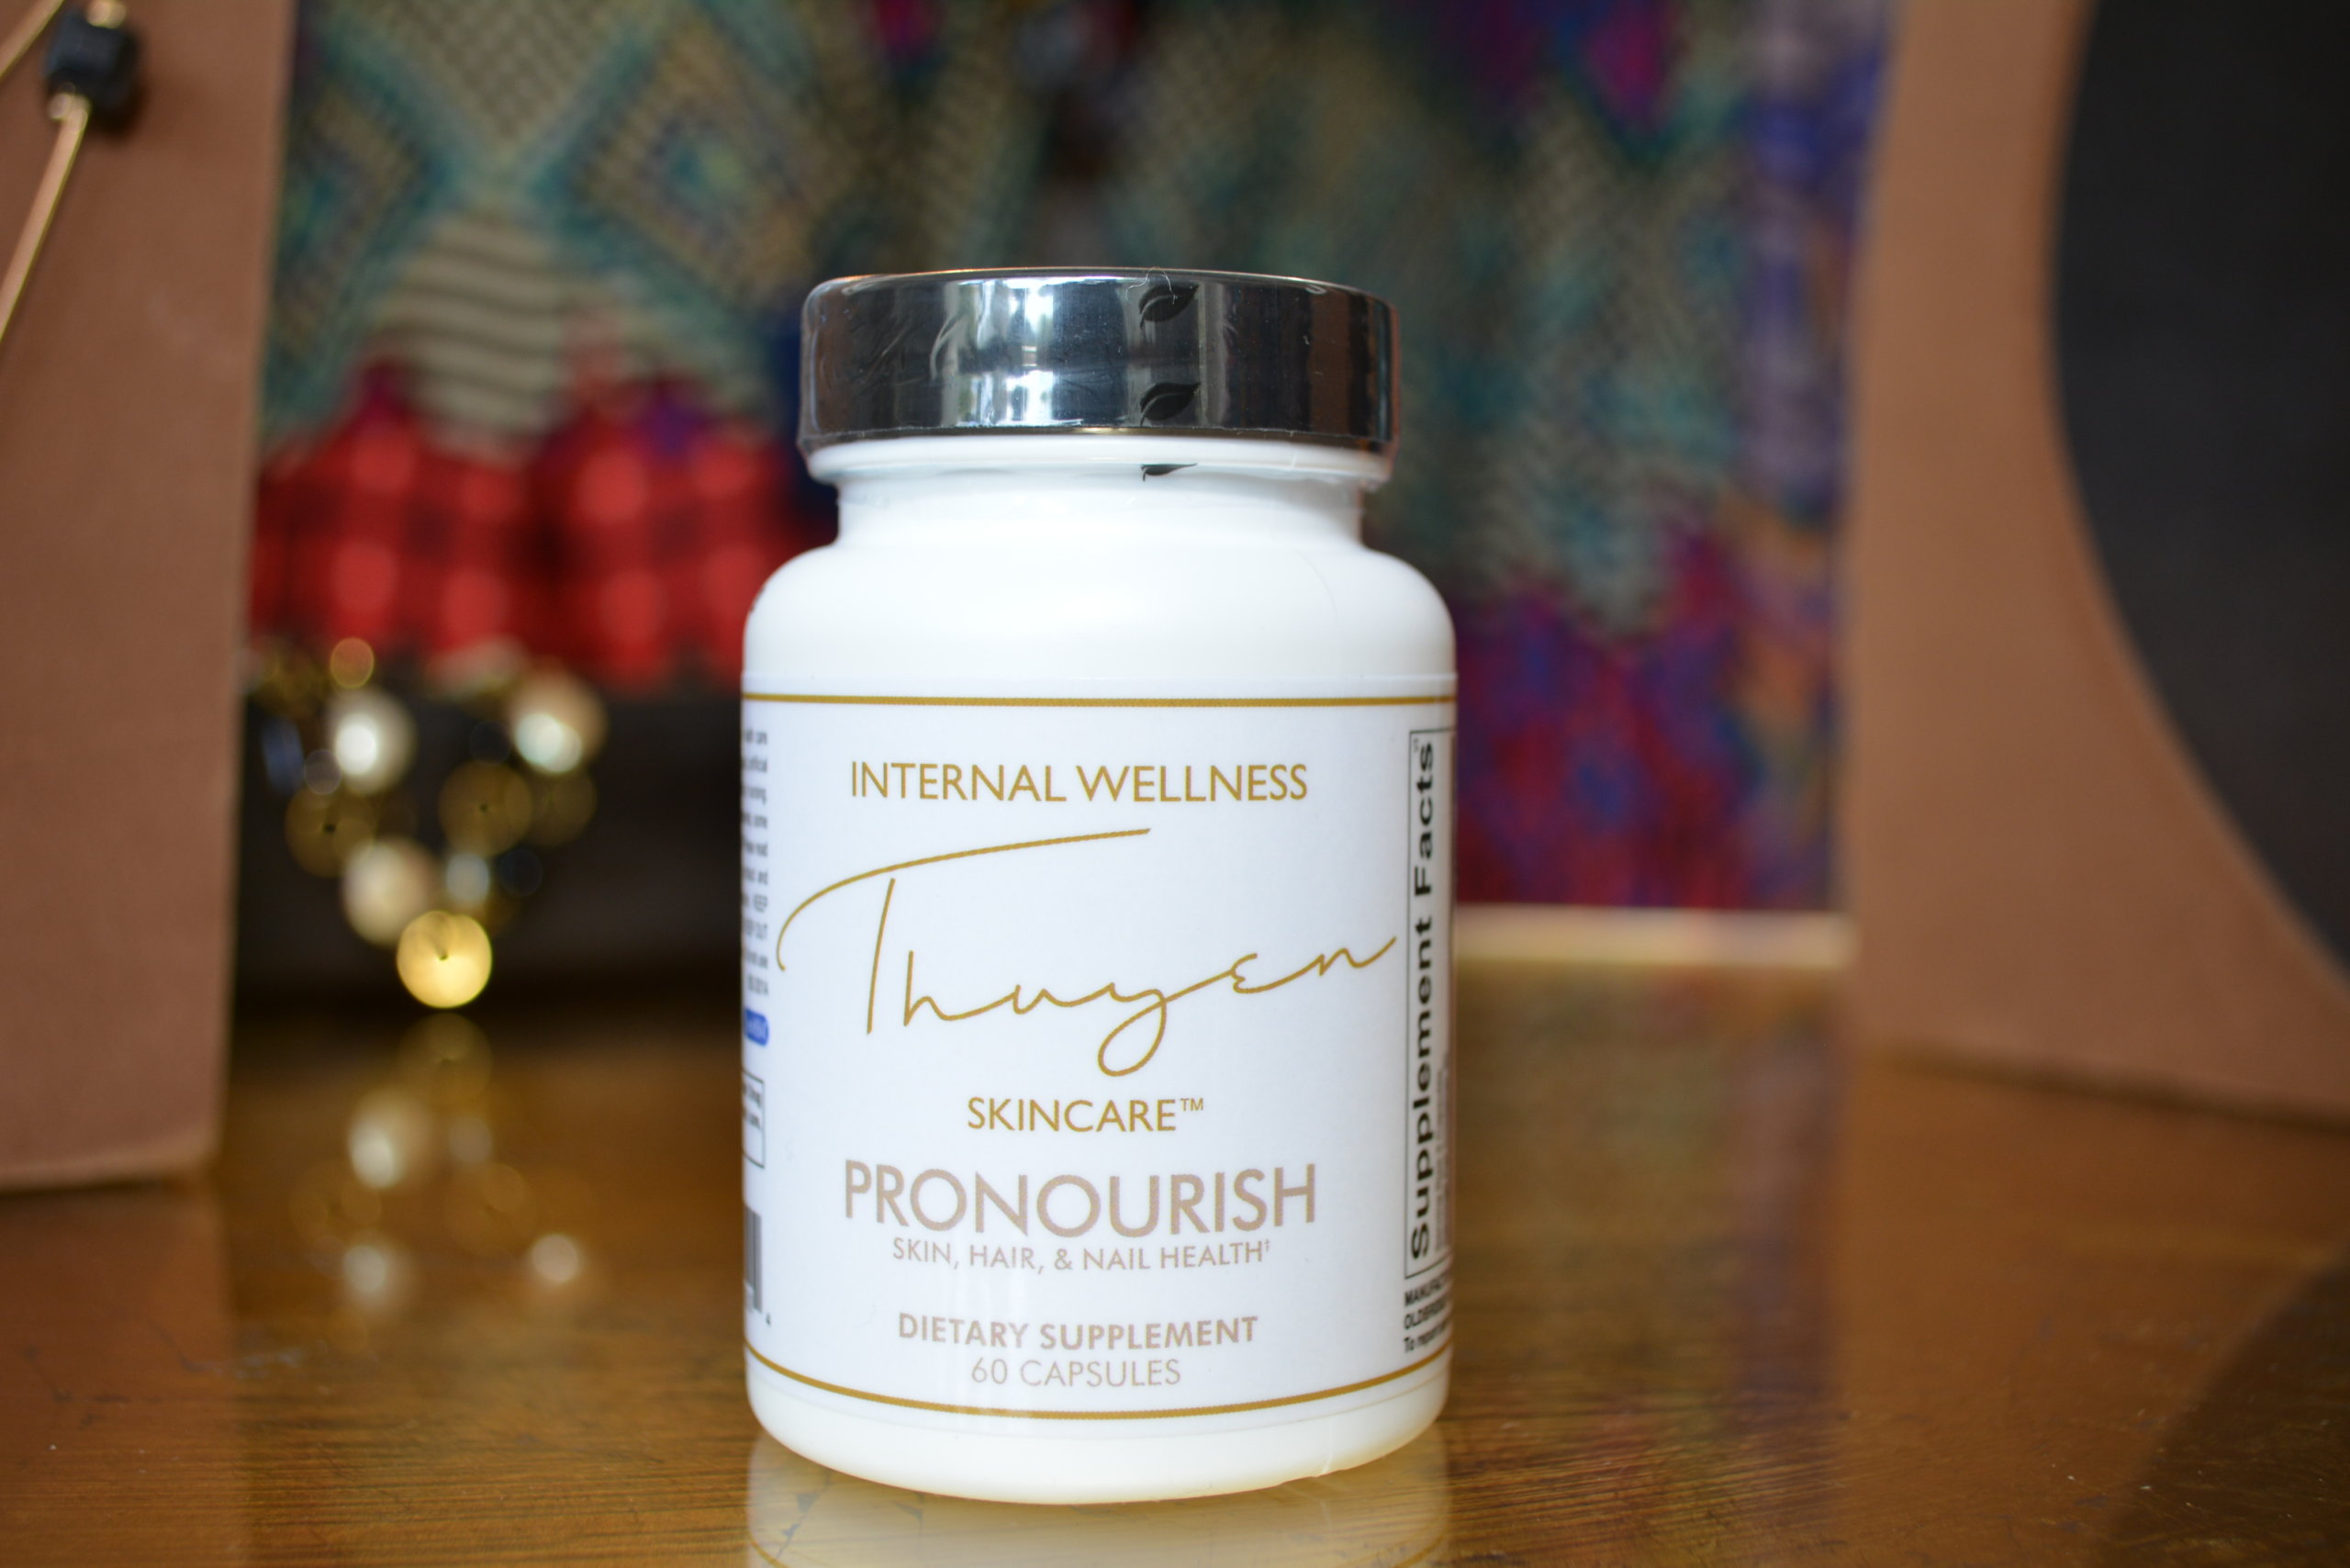 Thuyen Skincare Pronourish - a product for pride